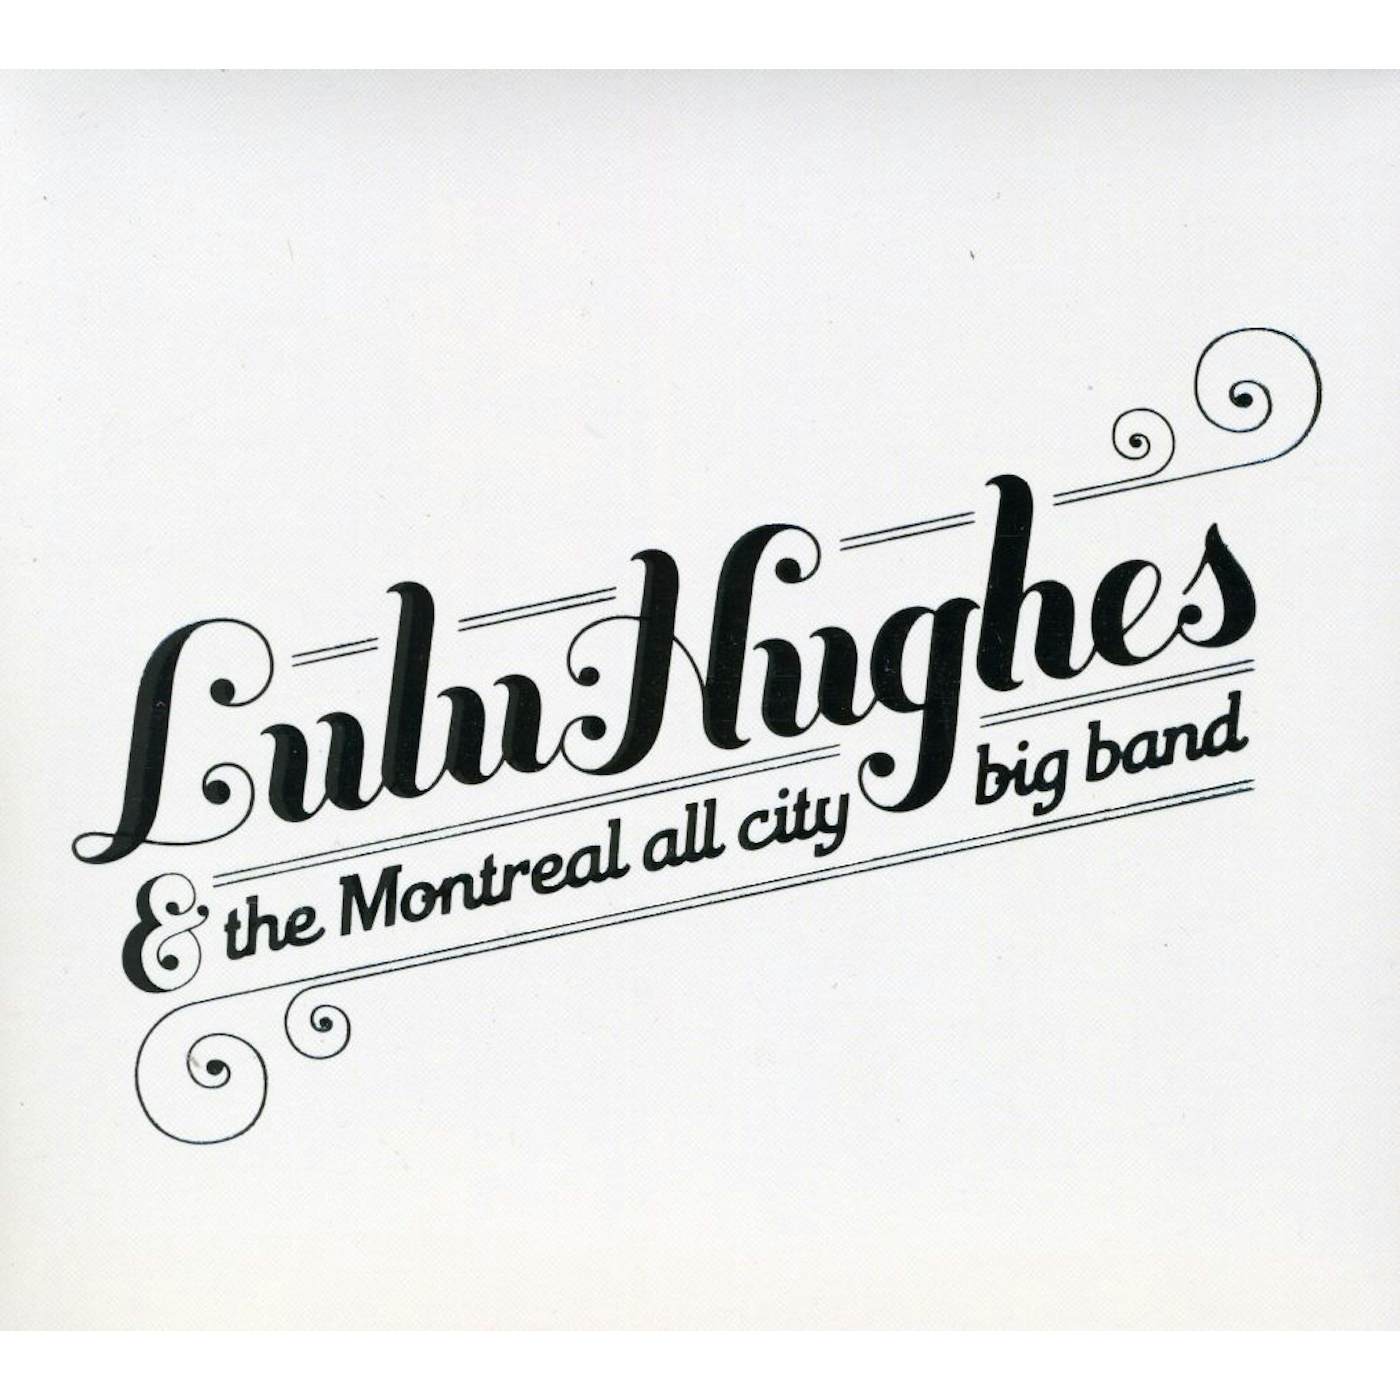 LULU HUGHES & THE MONTREAL CD